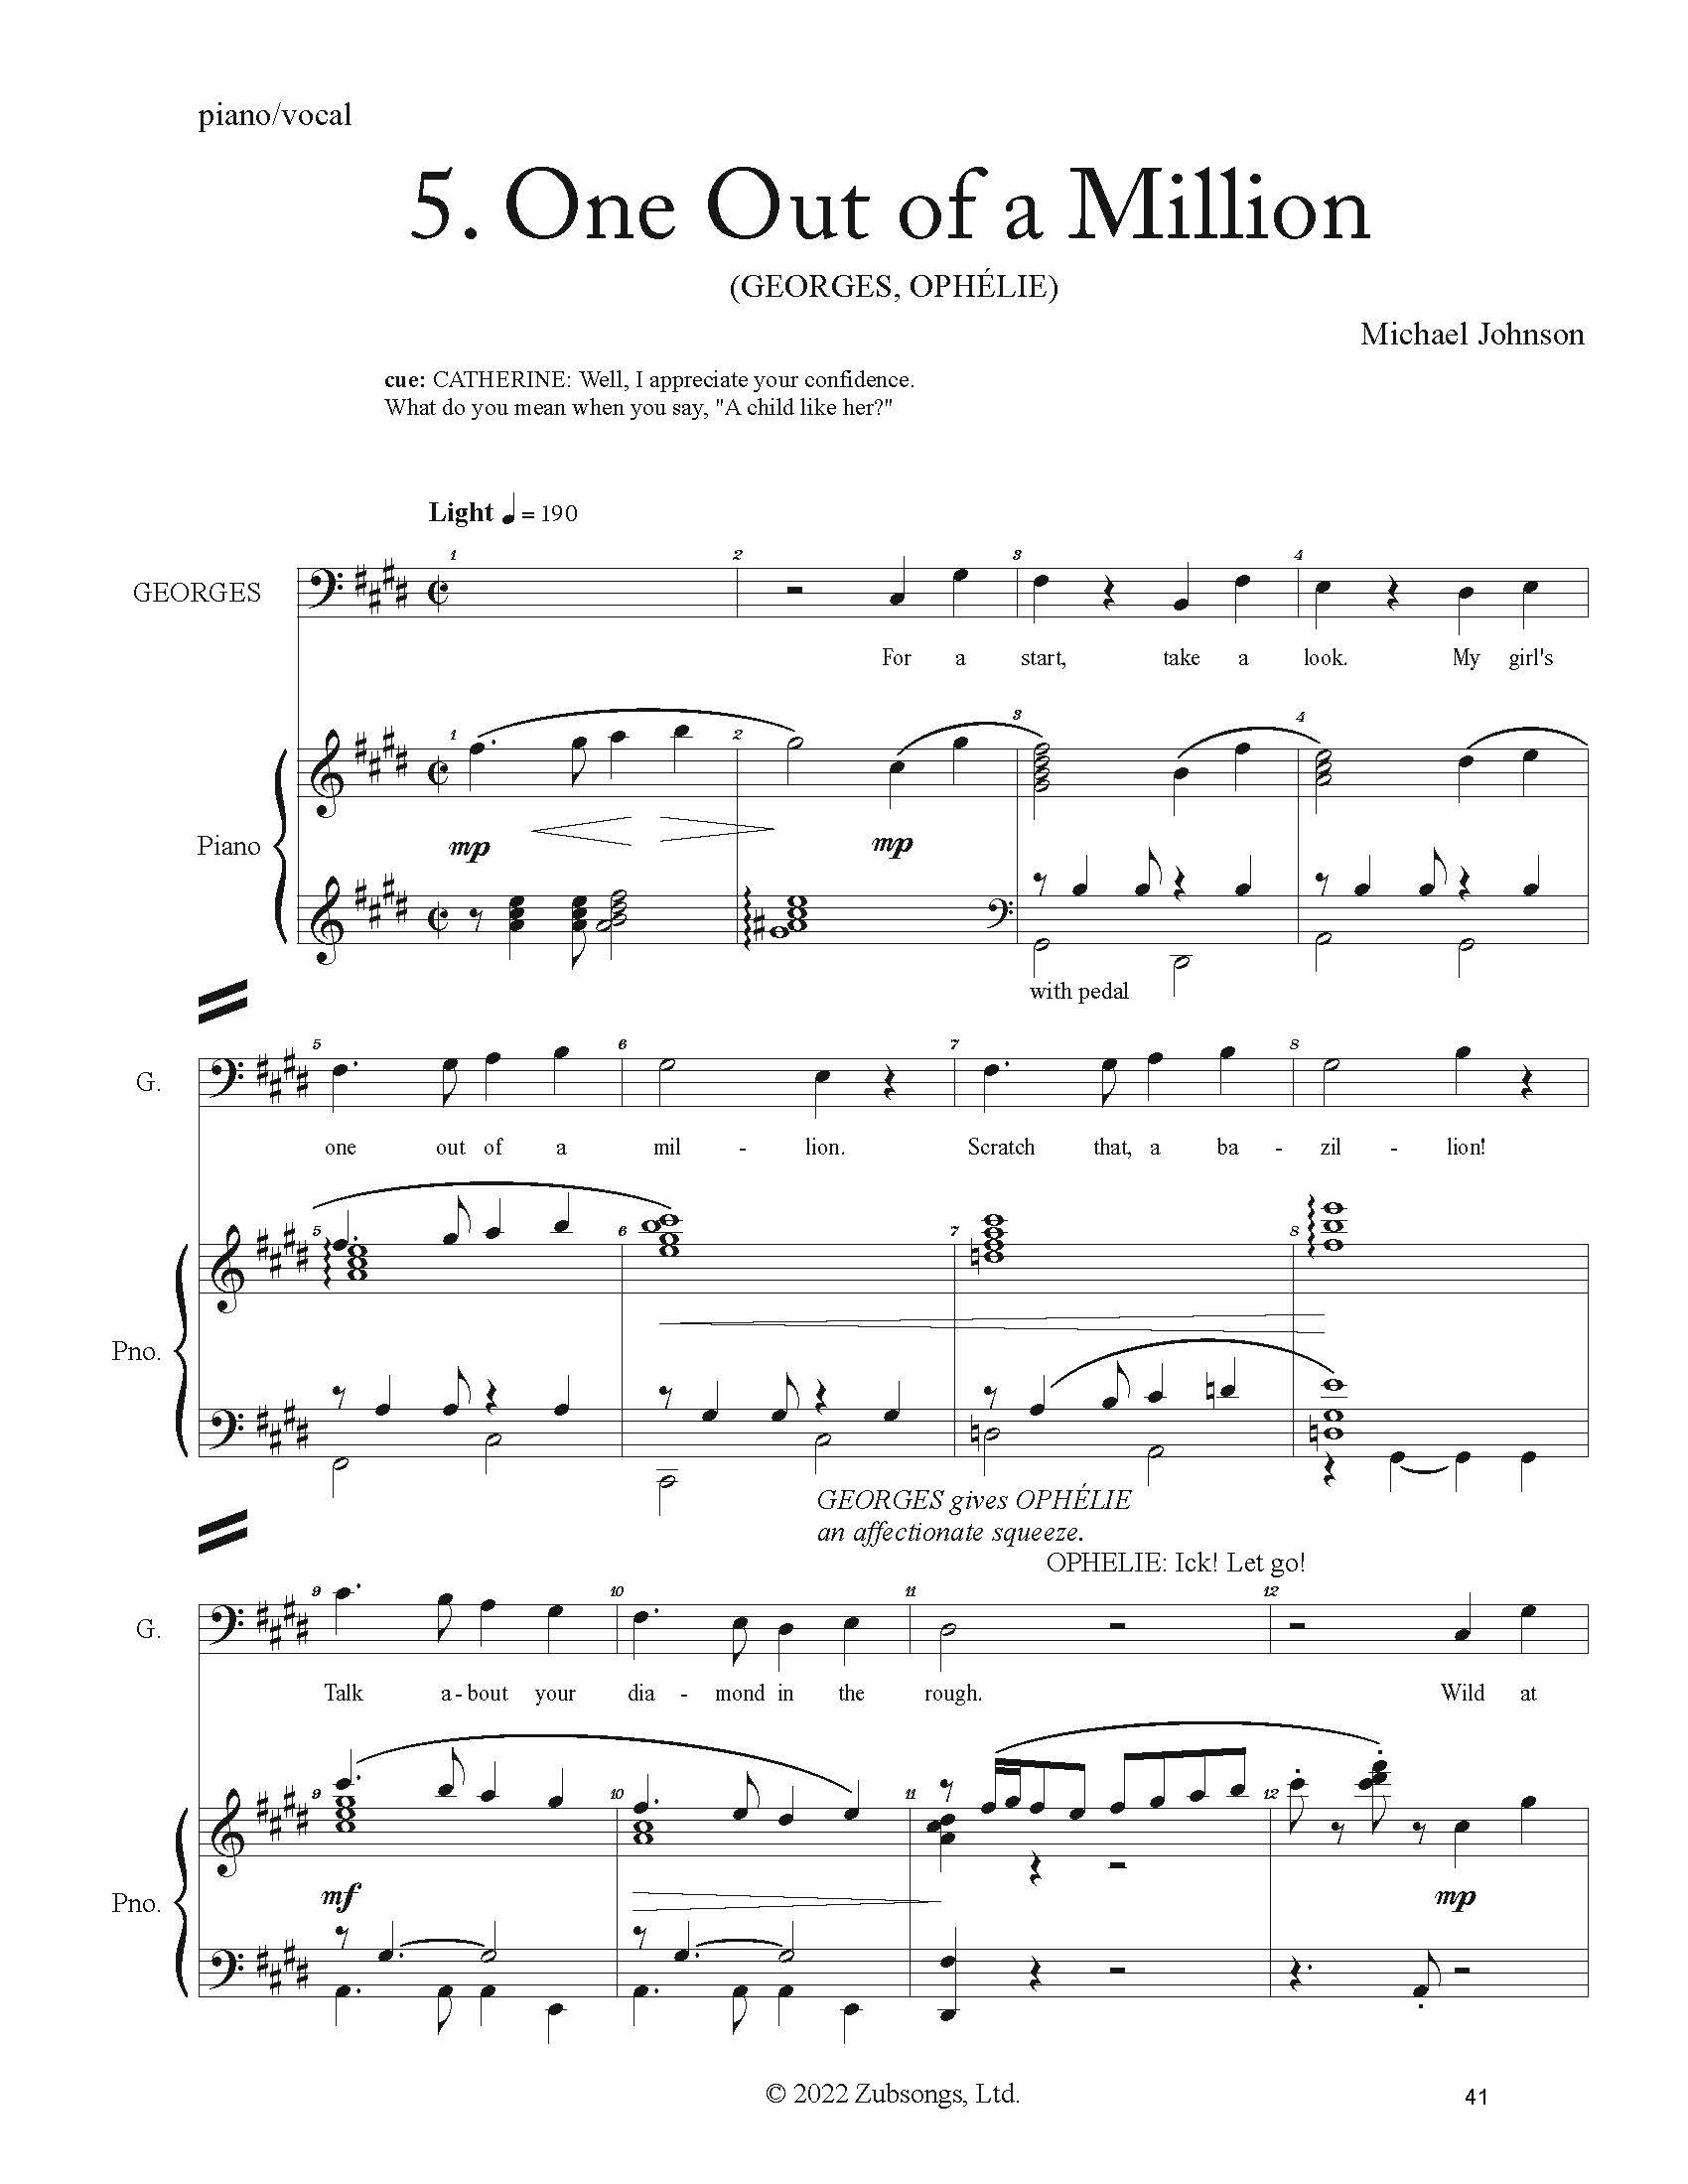 FULL PIANO VOCAL SCORE DRAFT 1 - Score_Page_041.jpg